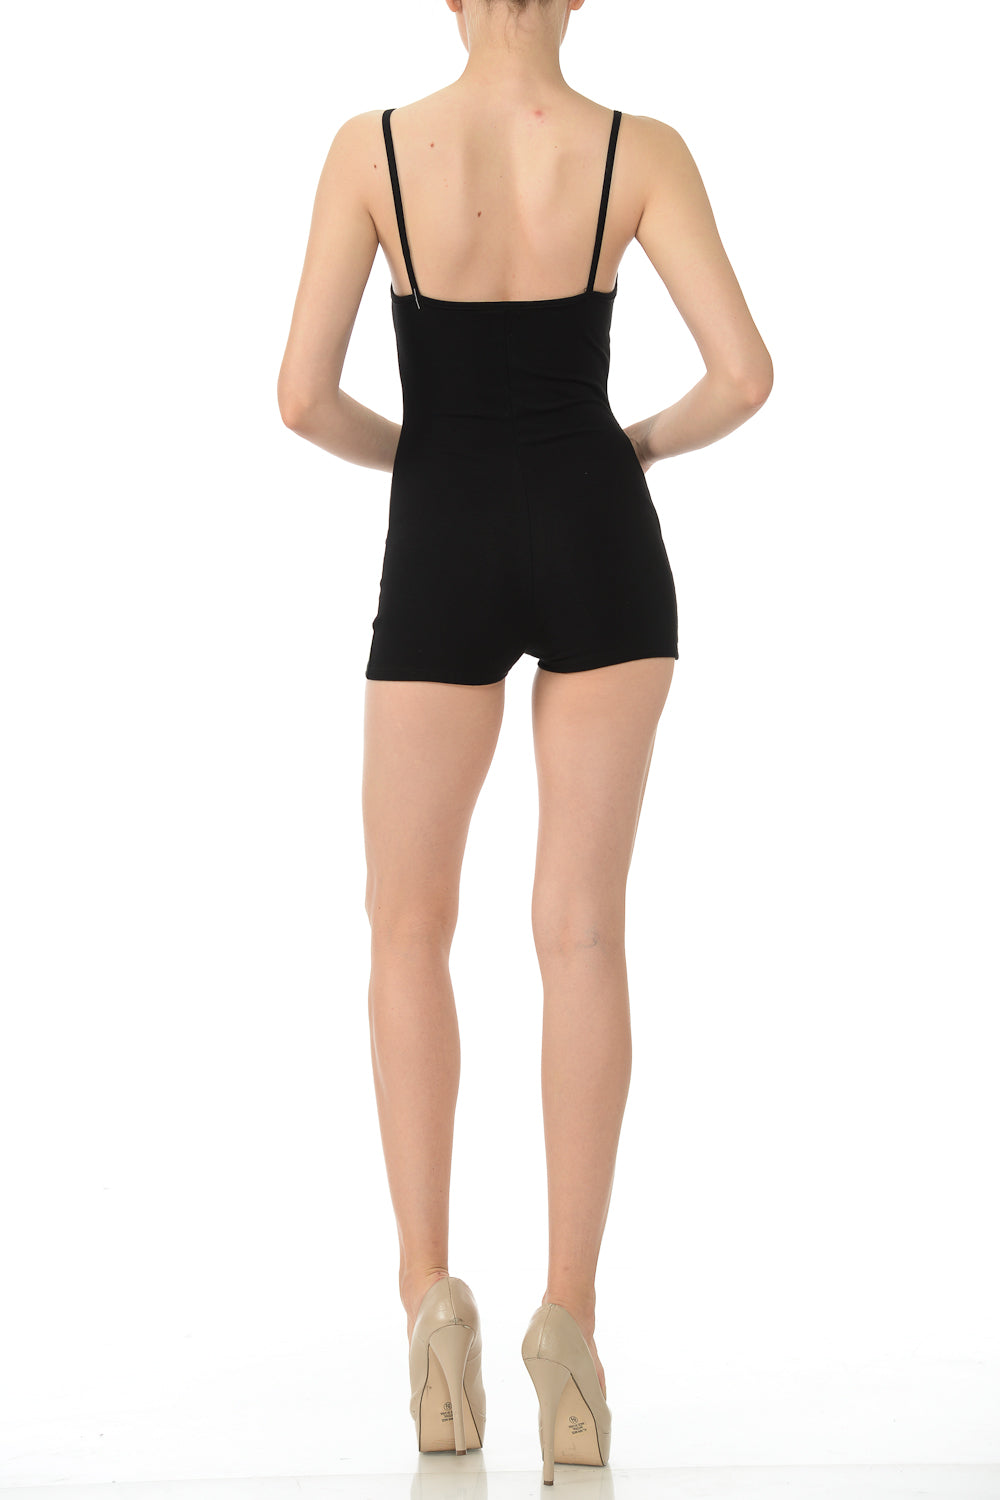 7Wins JJJ Women's Cotton Spaghetti Strapped Short Yoga Bodysuit Jumpsuit